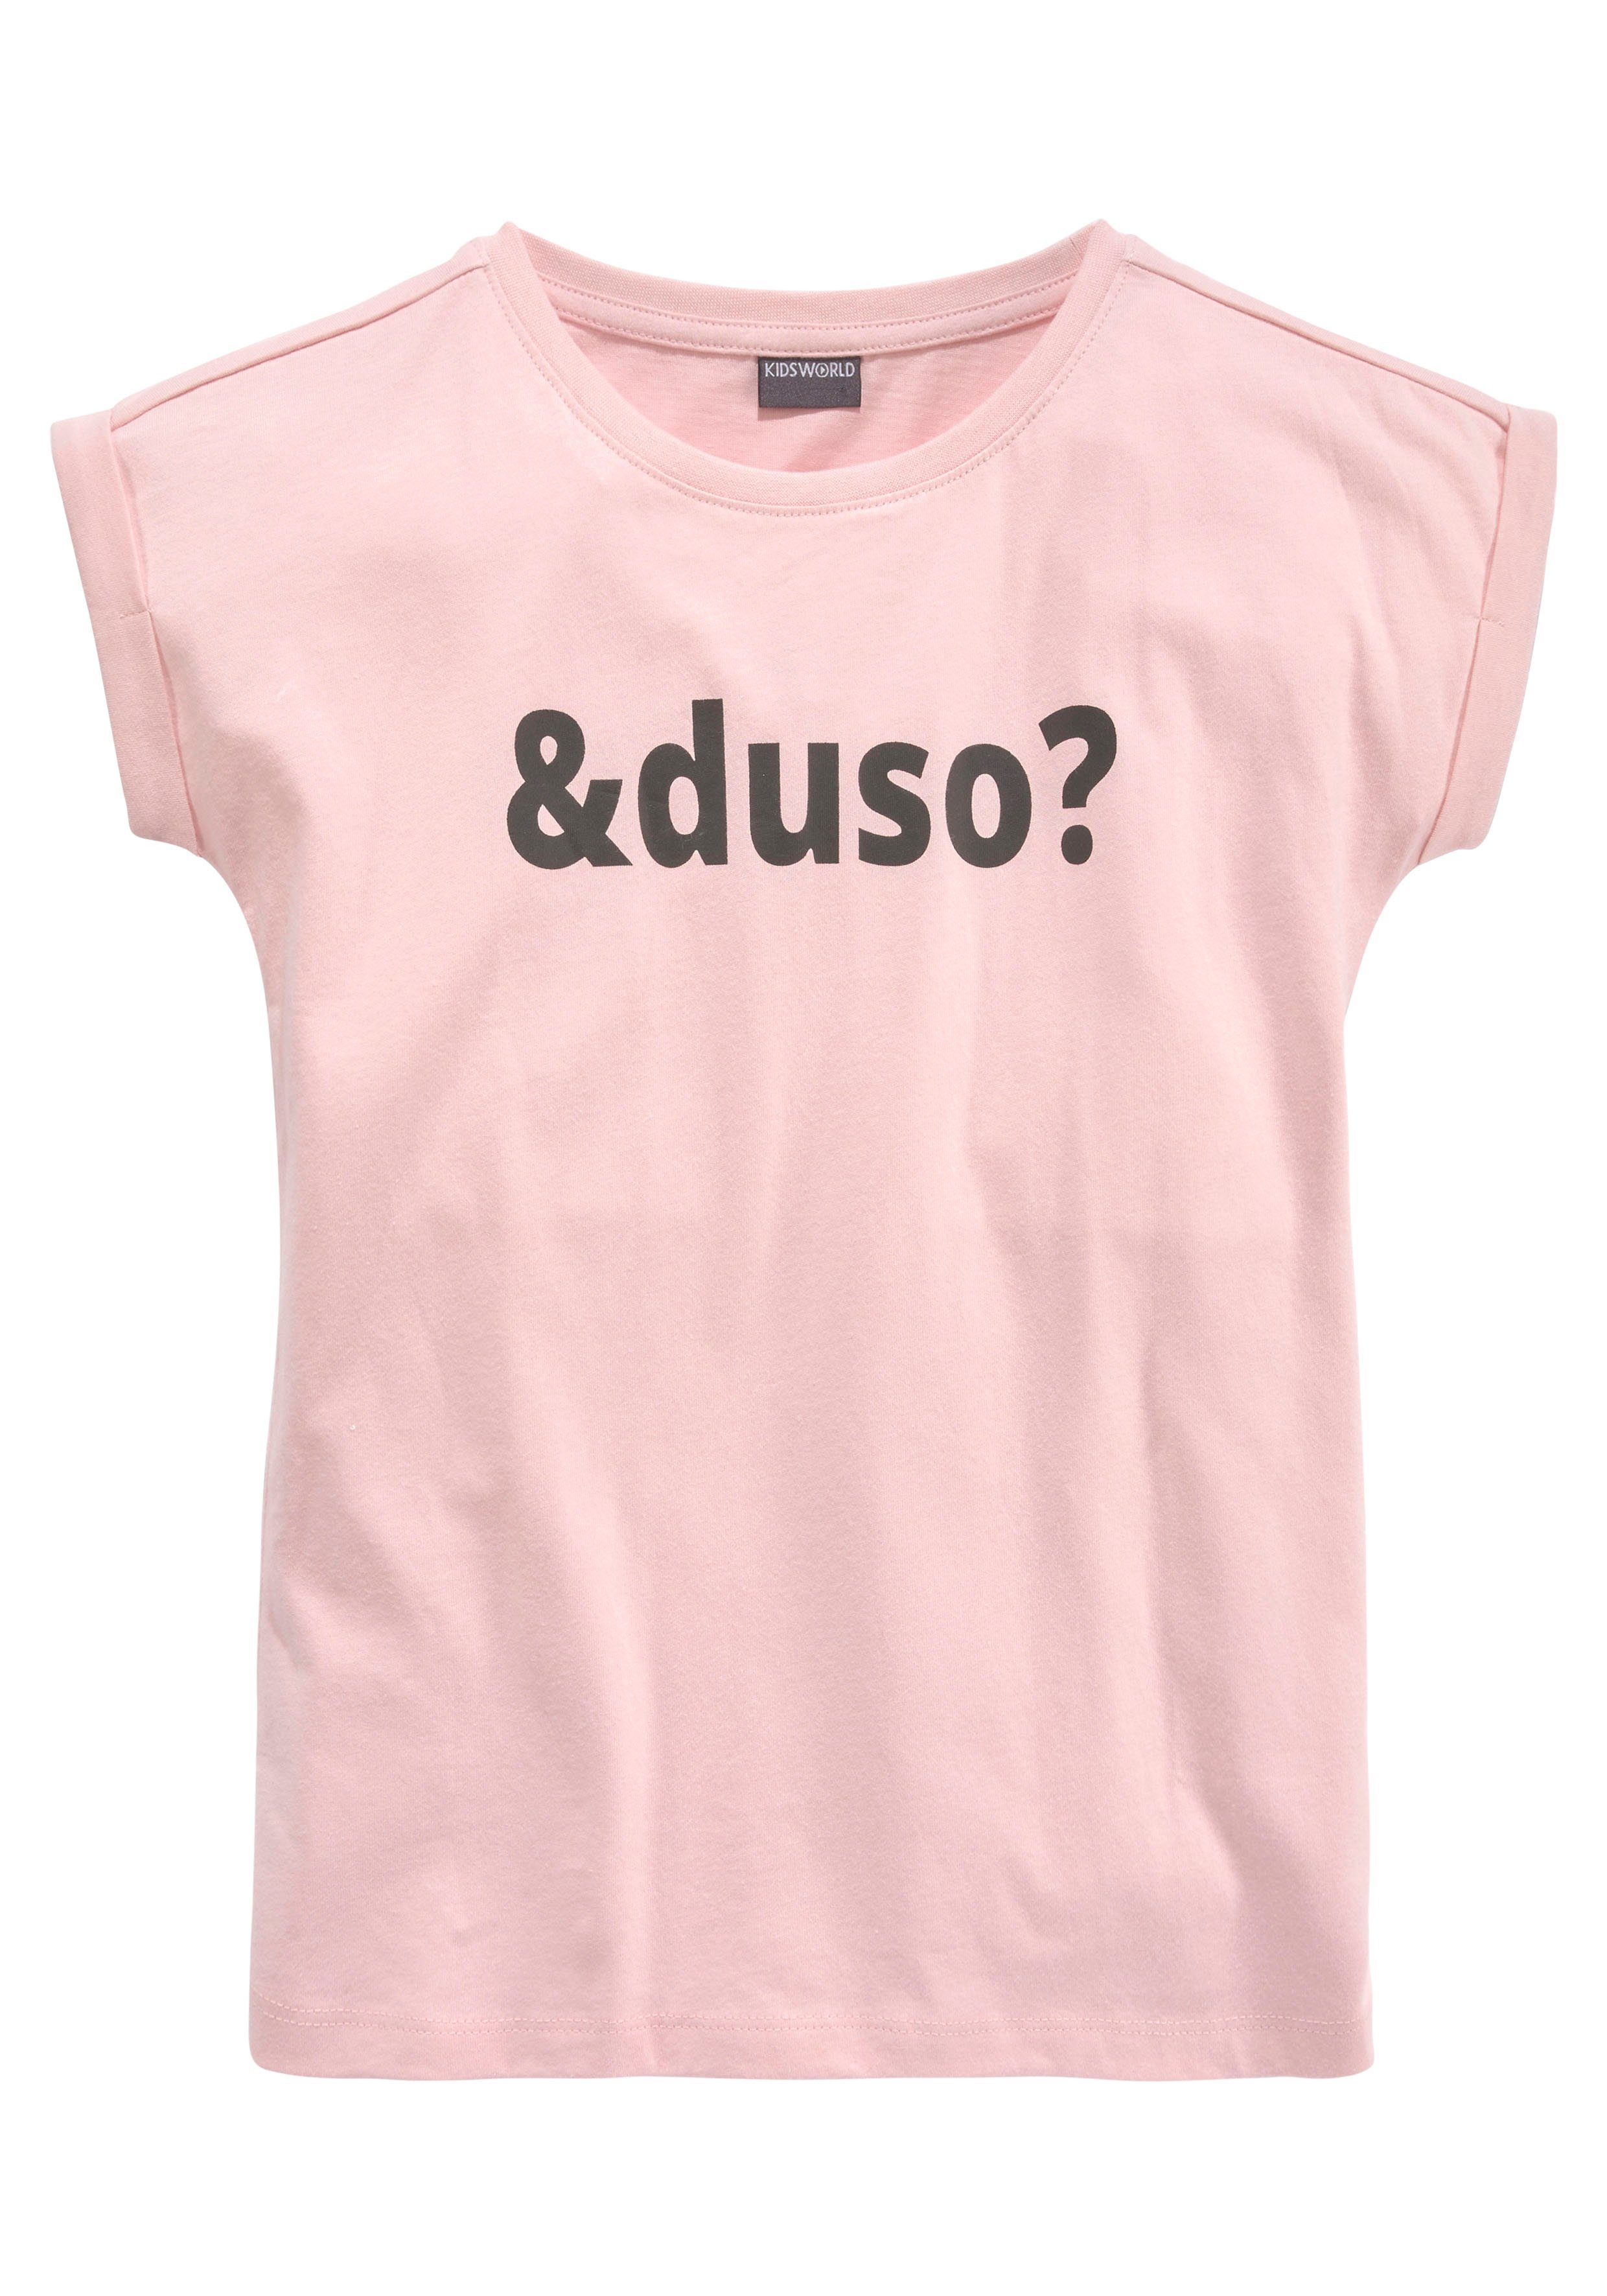 in KIDSWORLD bequemer T-Shirt &duso? Passform